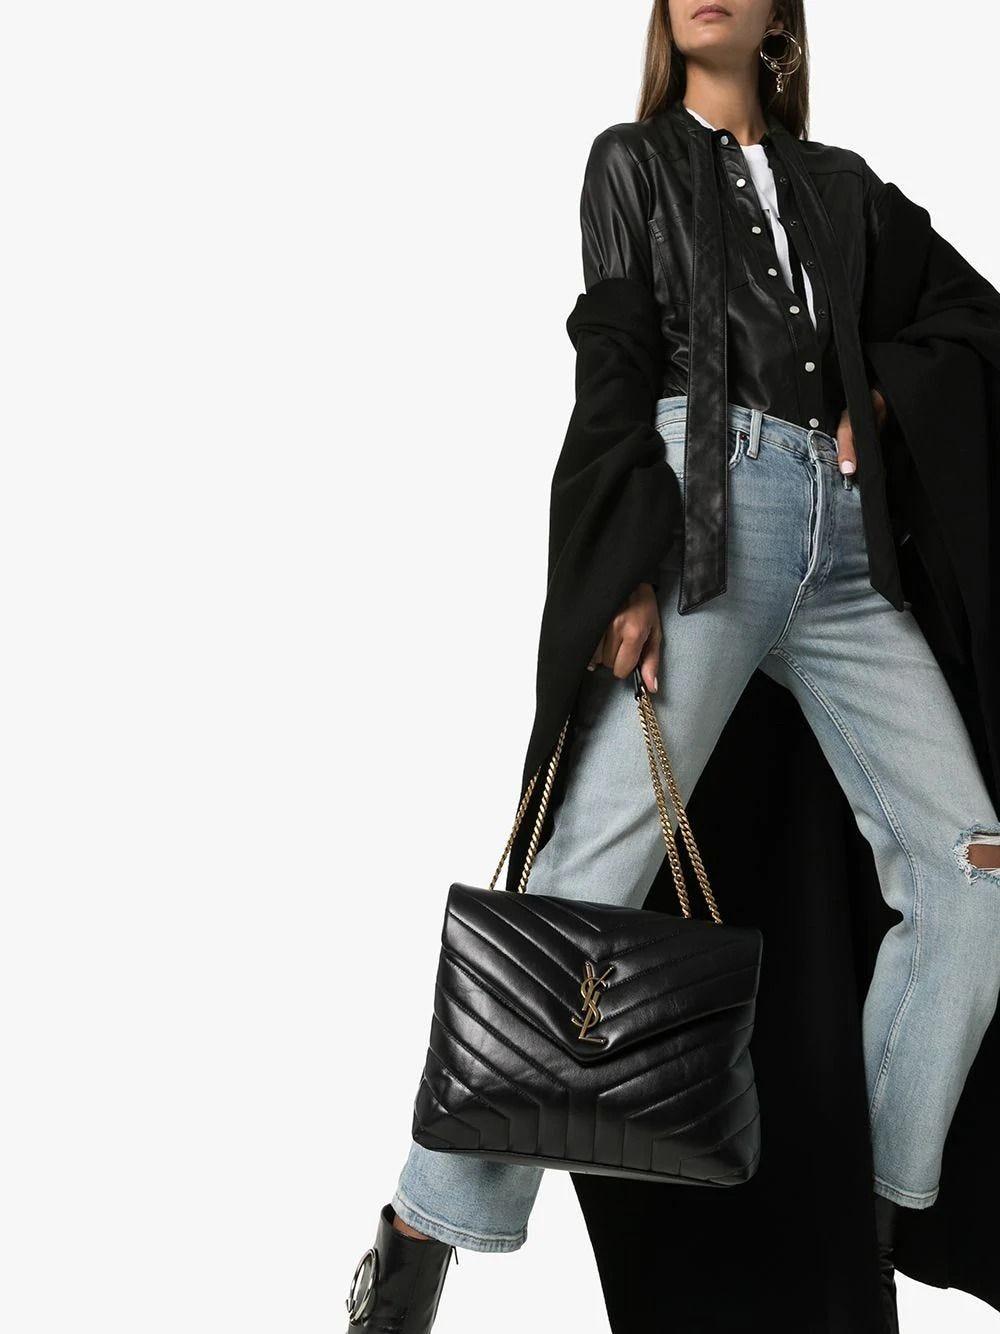 Saint Laurent Loulou Small Matelasse Y Leather Shoulder Bag